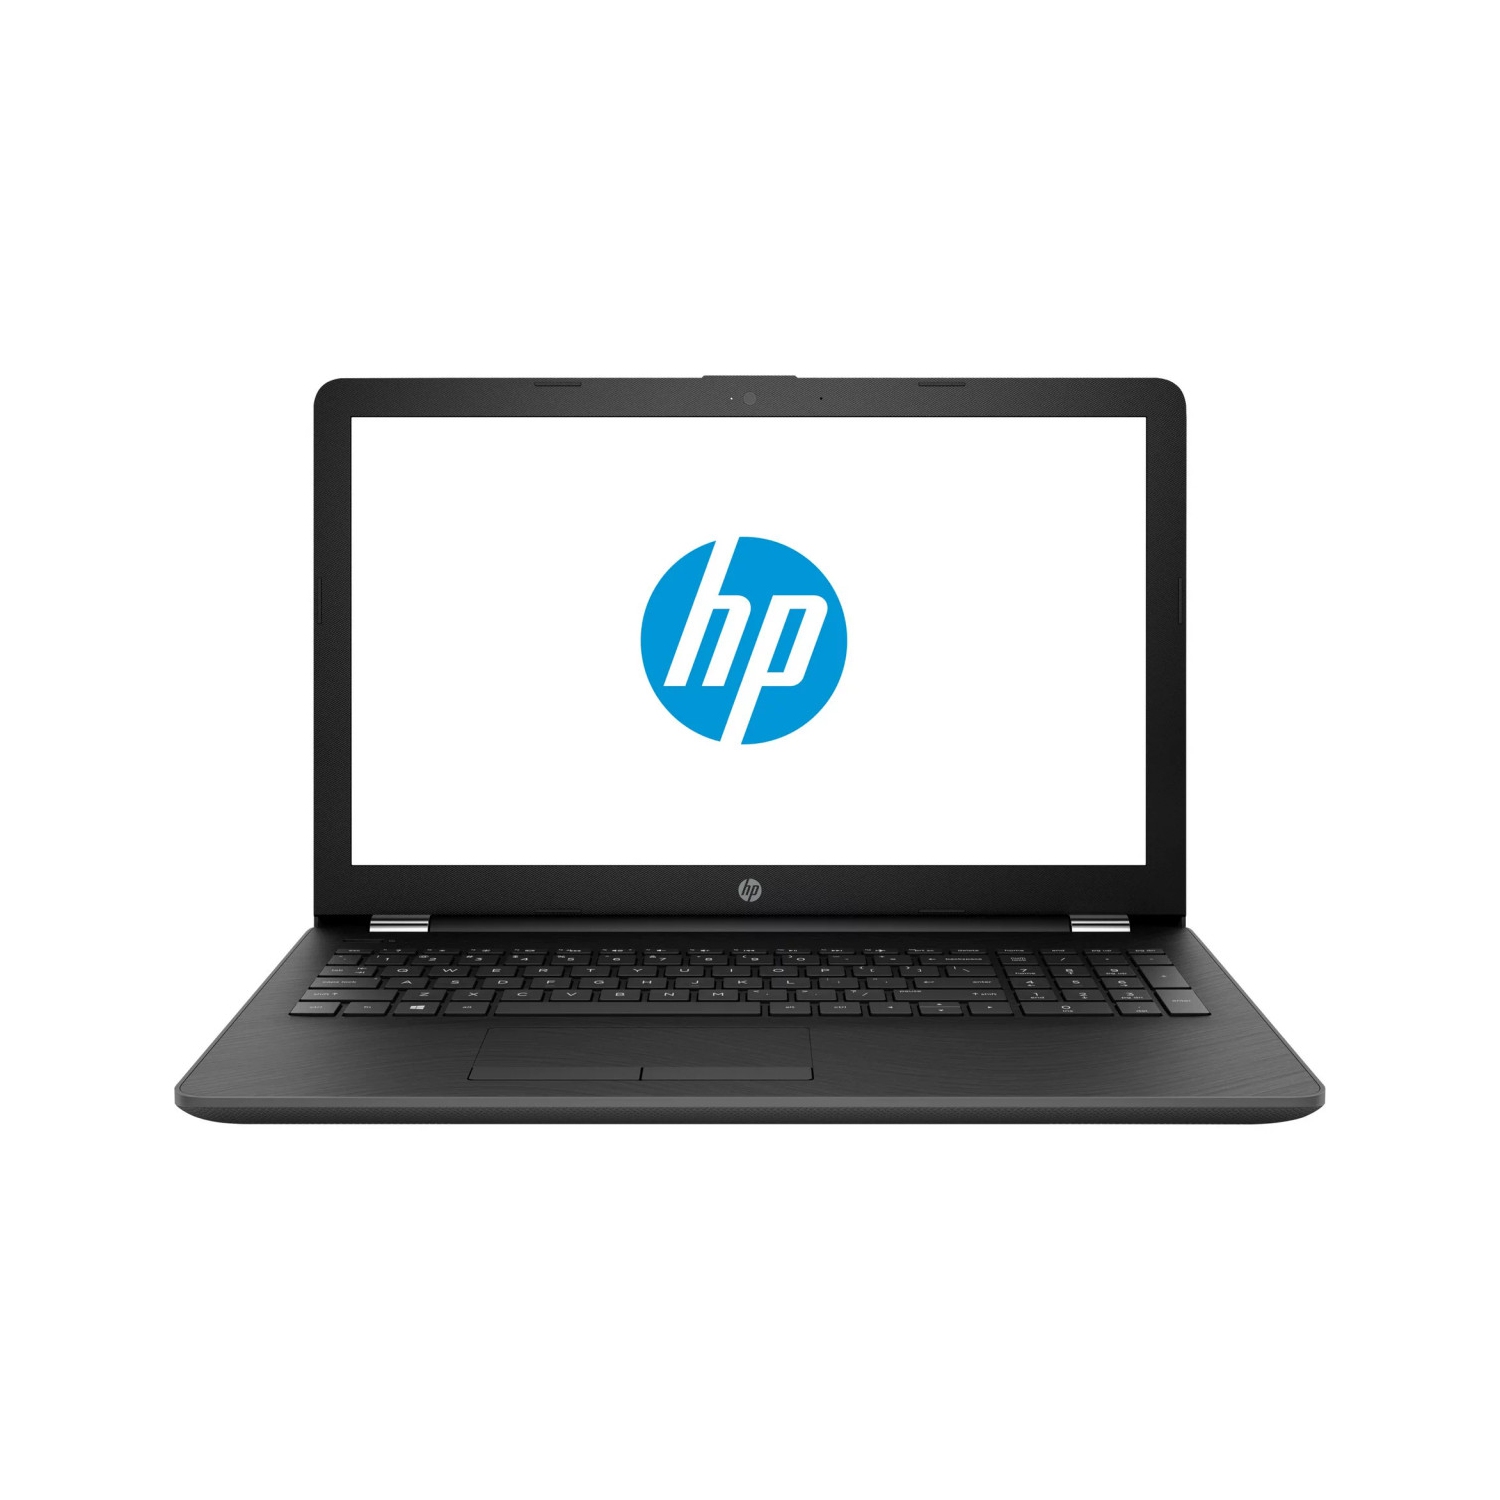 HP 15-BS033CL 15.6", HD 768p Touchscreen Laptop, Intel Core i3-7100U (2.40 GHz), 8GB RAM, 256GB SSD, Windows 10 (Refurbished-Good)